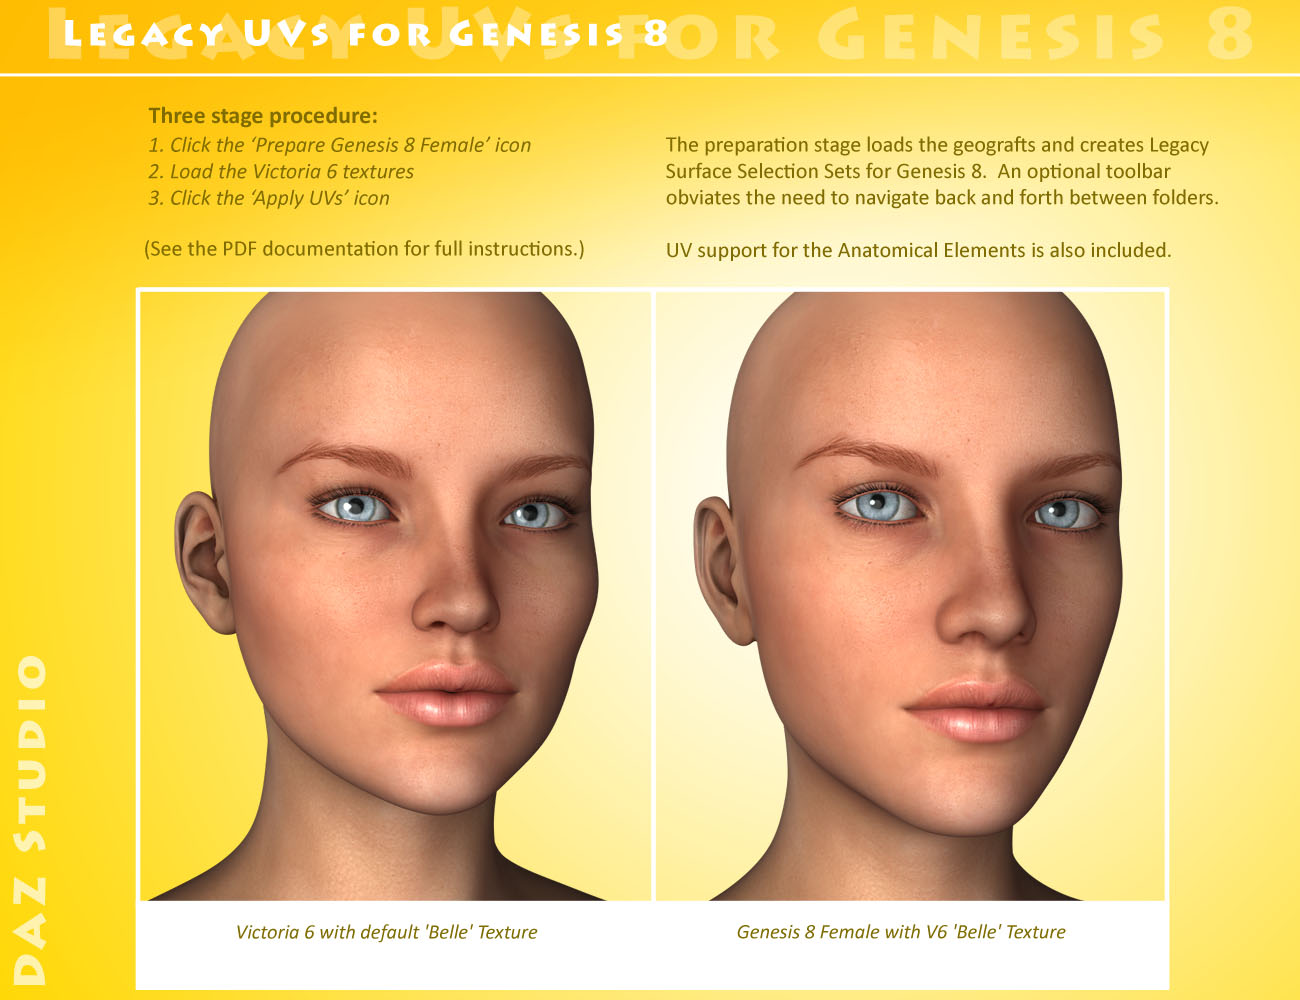 Legacy UVs for Genesis 8: Victoria 6 by: Cayman Studios, 3D Models by Daz 3D